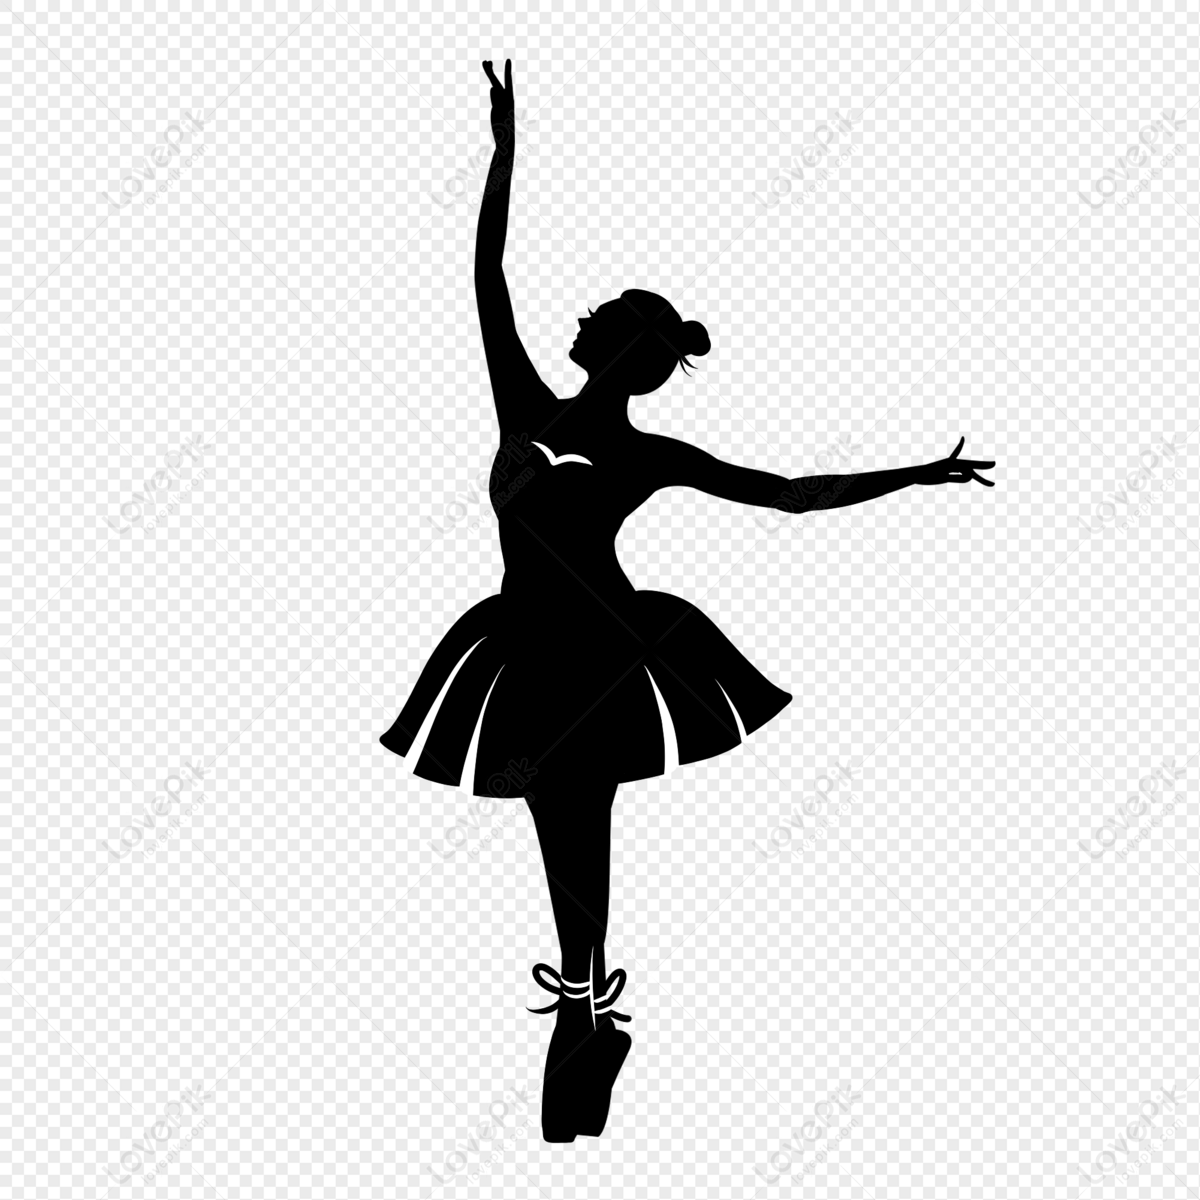 Lovepik Dancing Girl Silhouette Png Image 401746195 Wh1200 